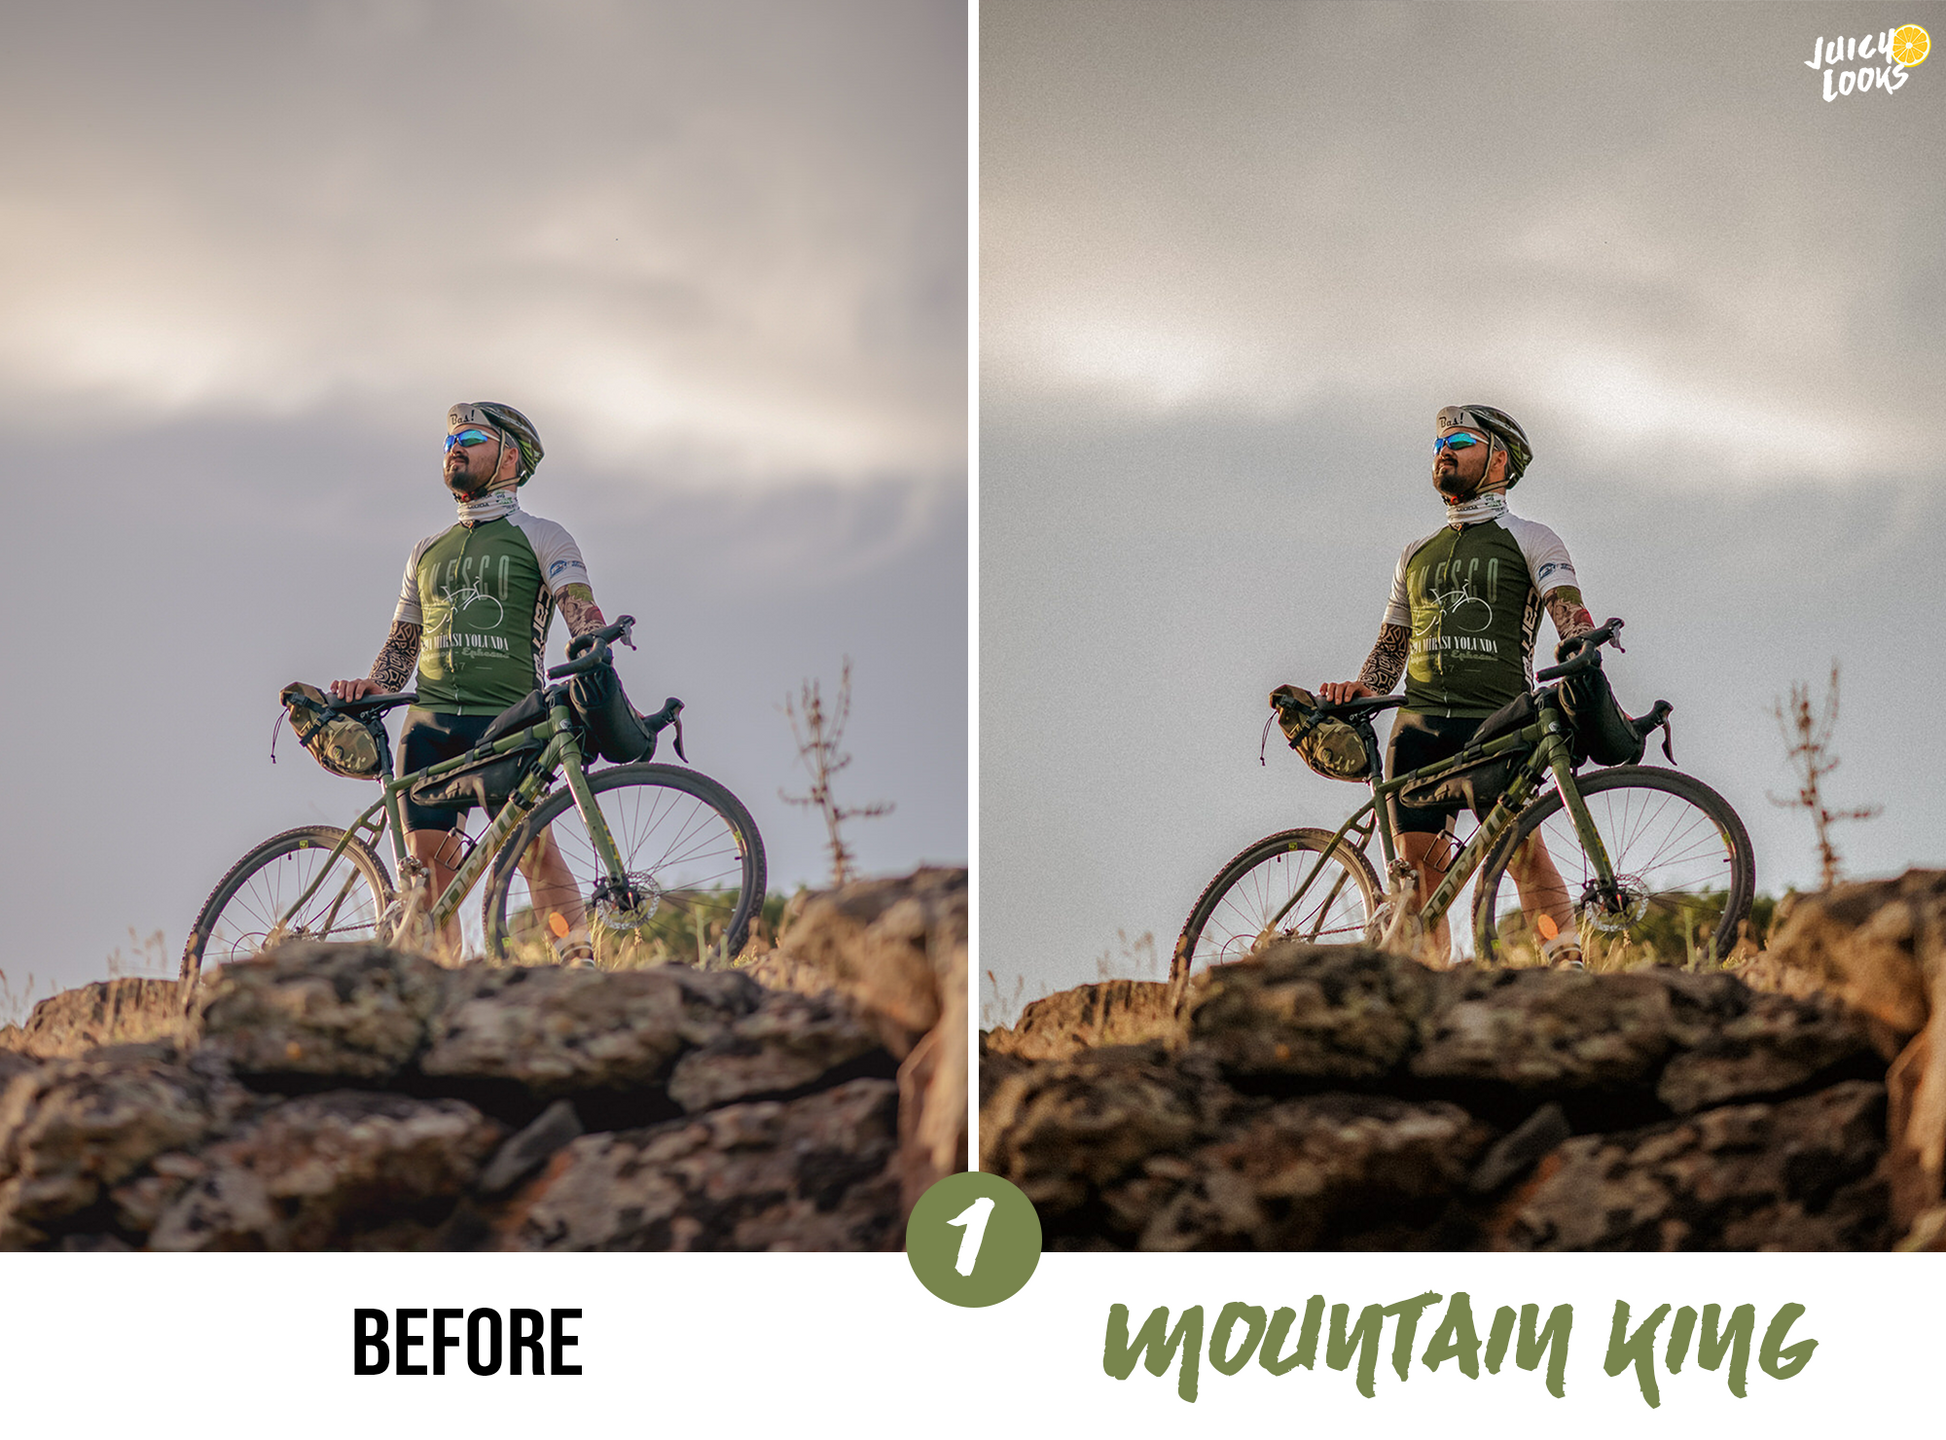 Cross Country / Mountain Bike Lightroom Presets for Mobile & Desktop - Juicy Looks Presets